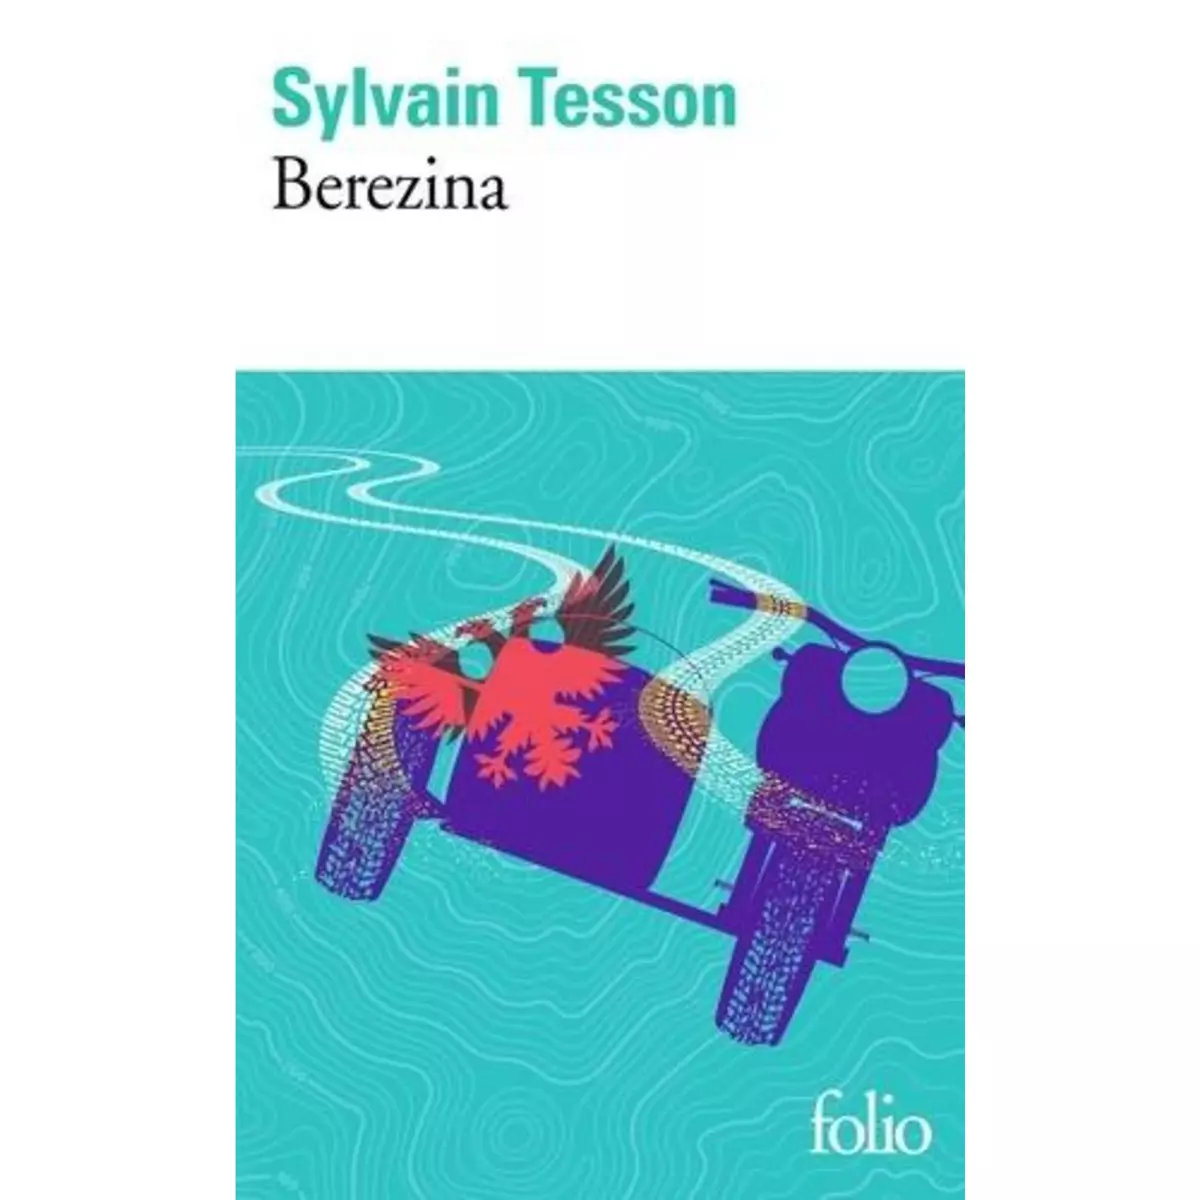  BEREZINA, Tesson Sylvain